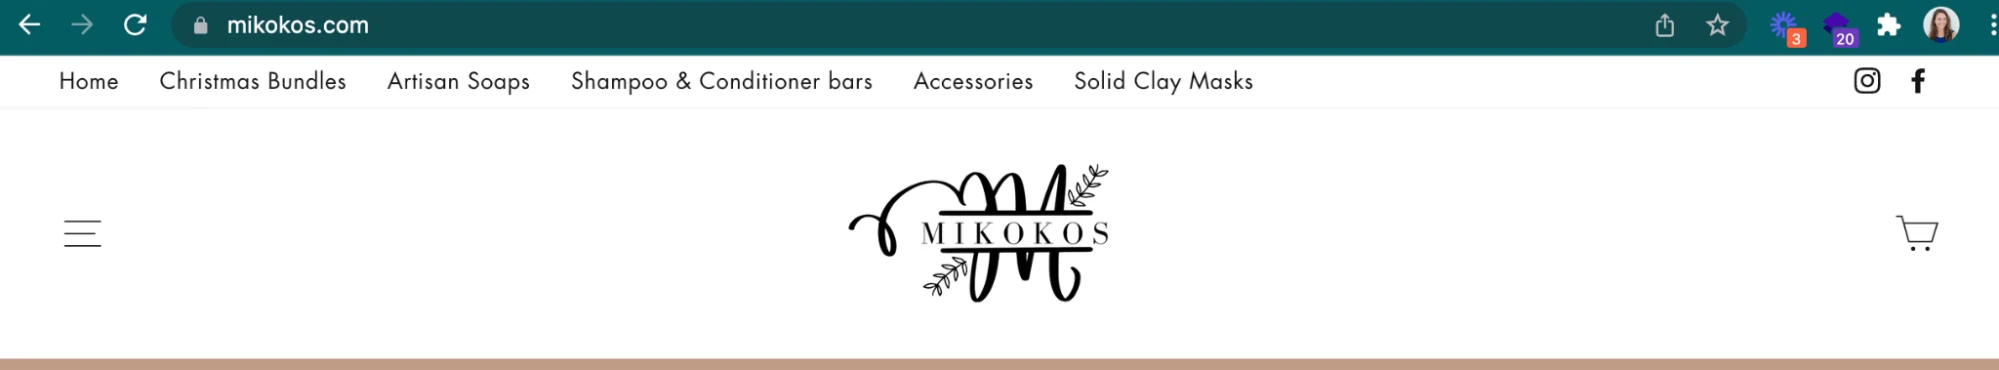 Shopify 商家 Mikokos 用 mikokos.com 作为域名